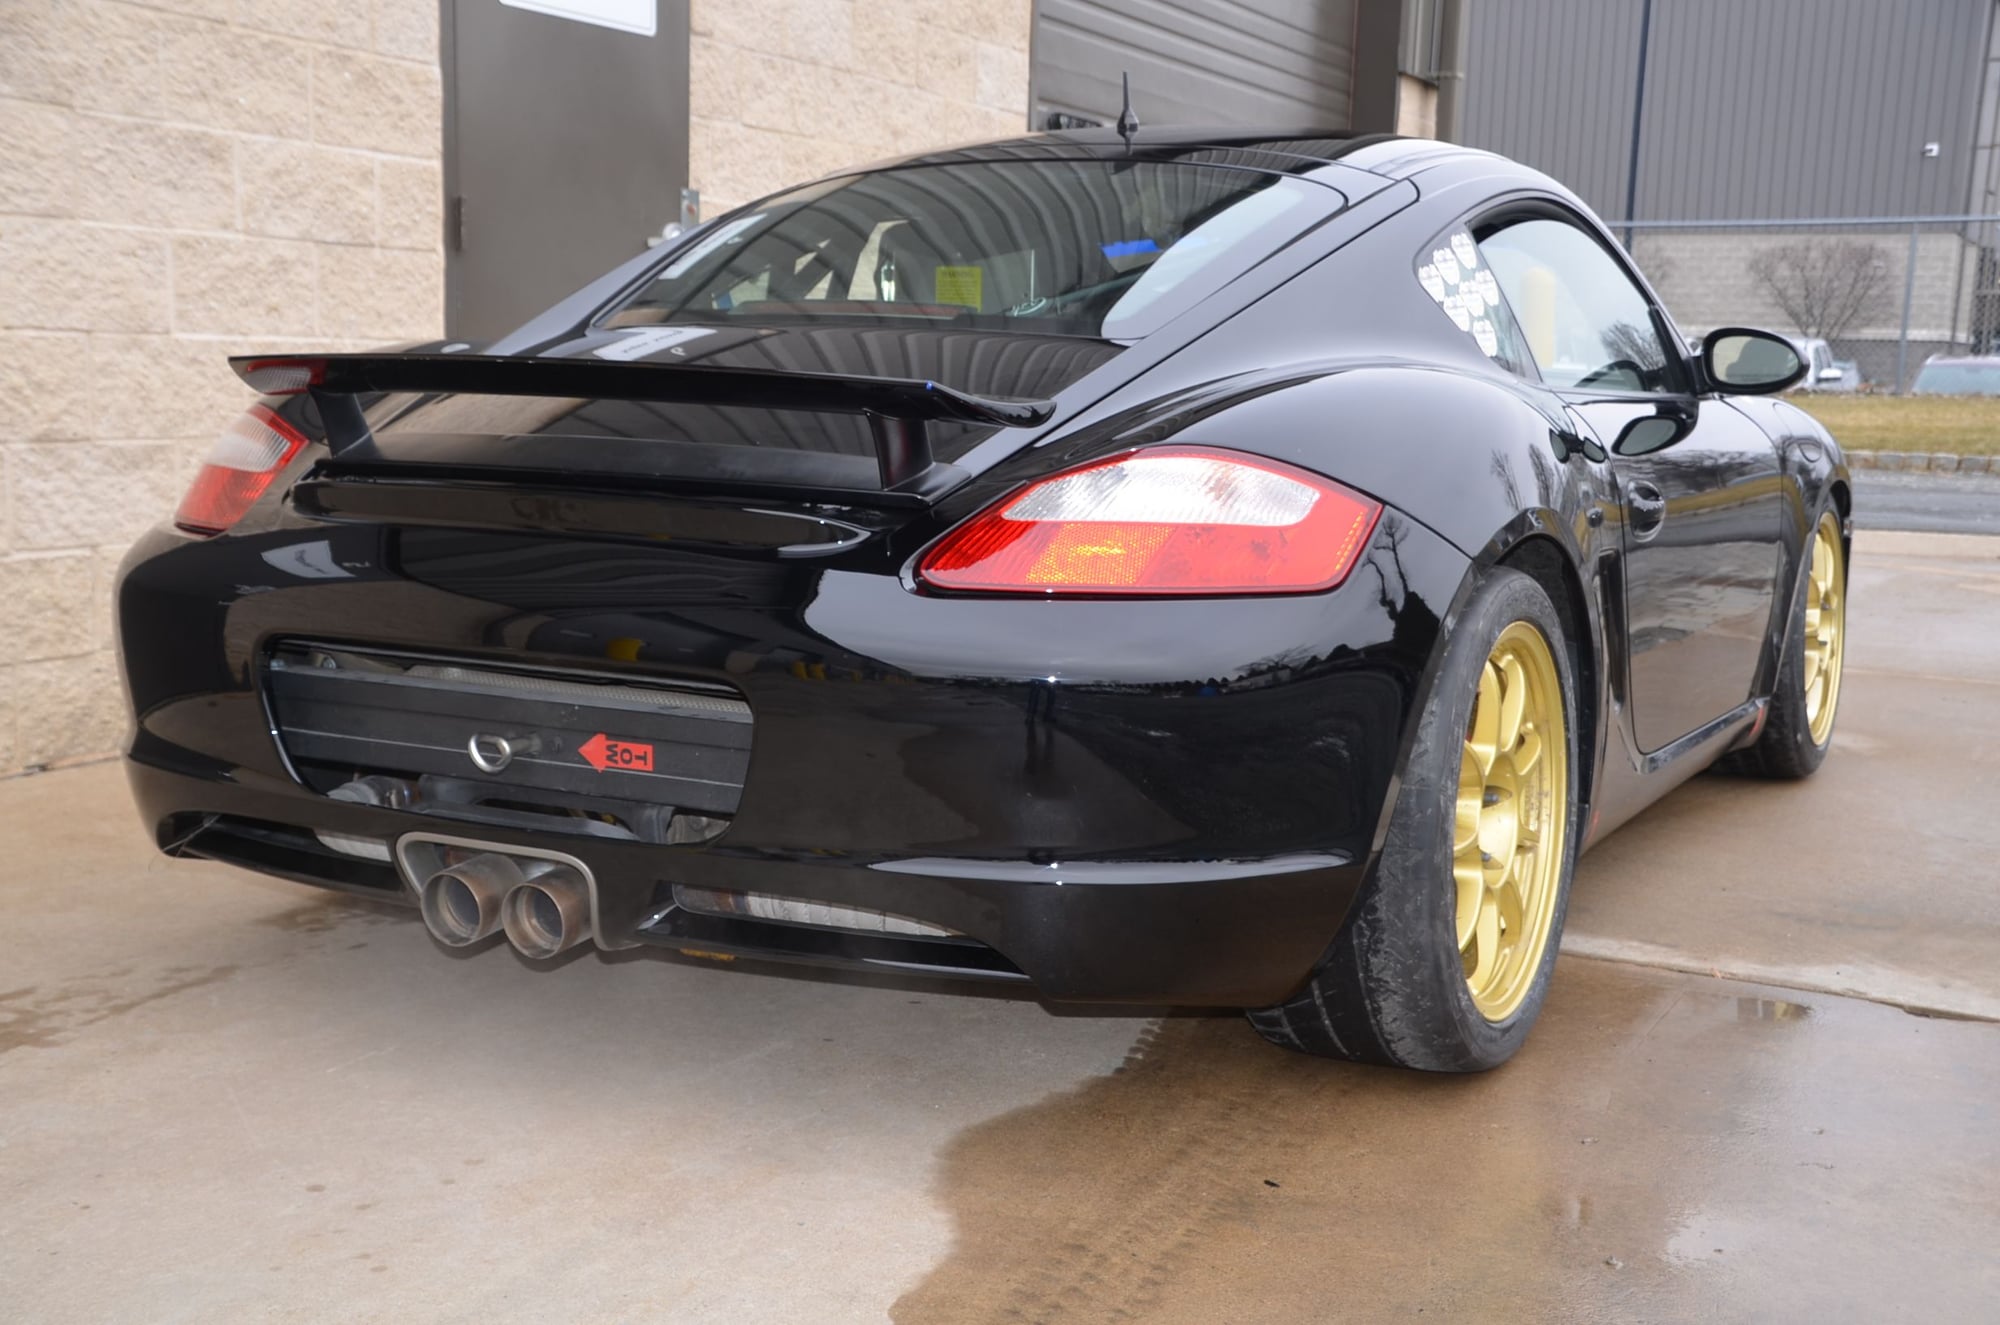 2006 Porsche Cayman - FS: 2006 Cayman S DE/Racecar - Currently an SPC spec PCA Club Racer - Used - VIN wp0ab29896u781511 - 6 cyl - 2WD - Manual - Coupe - Black - Randolph, NJ 07869, United States